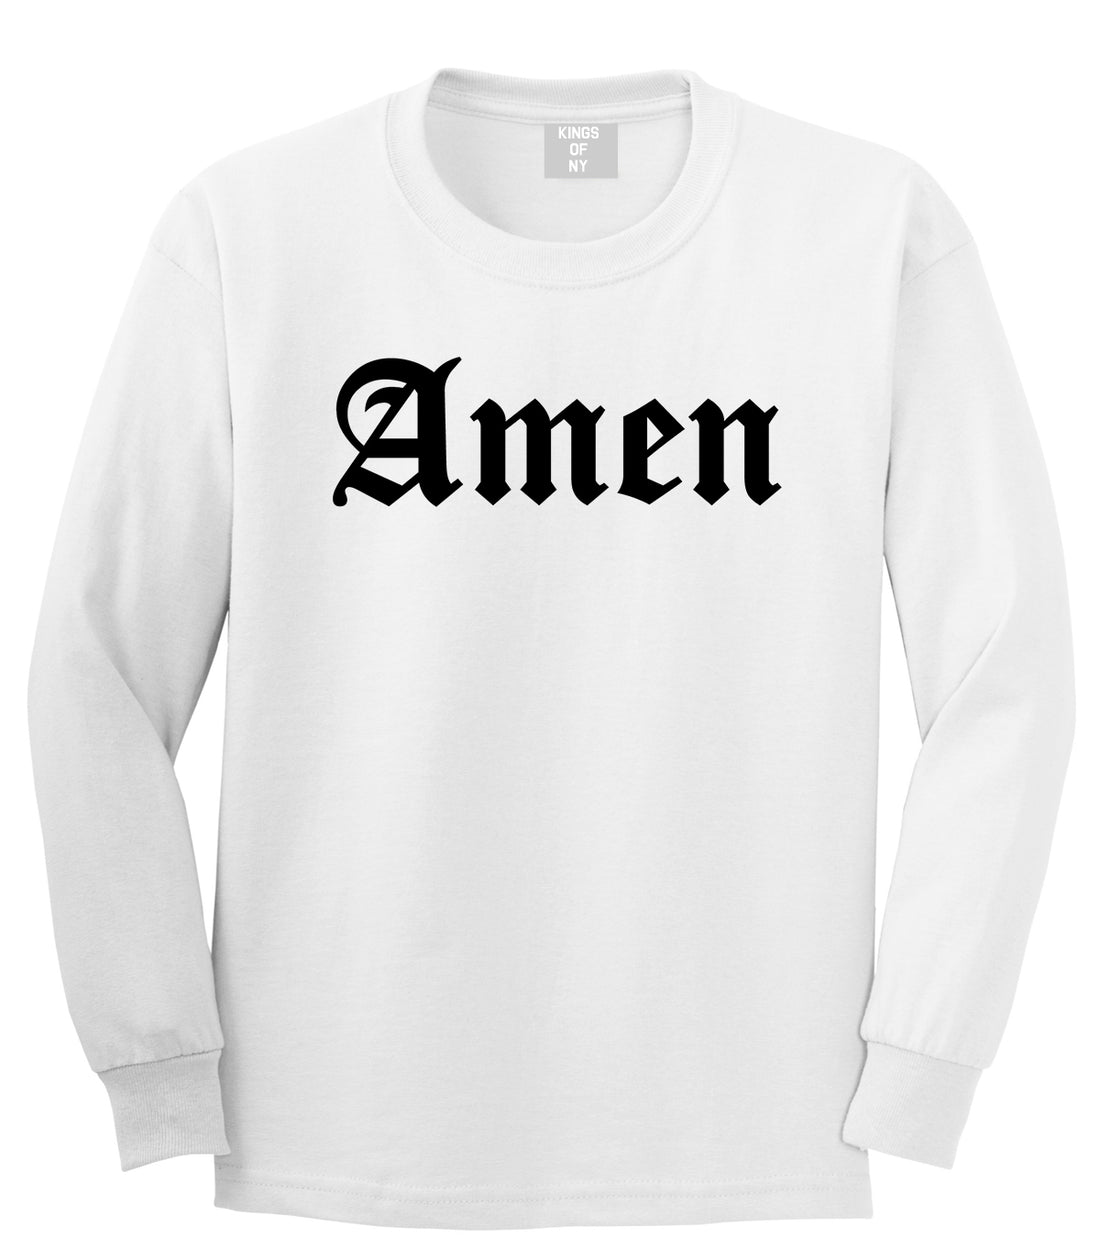 Amen Old English Prayer Mens Long Sleeve T-Shirt White